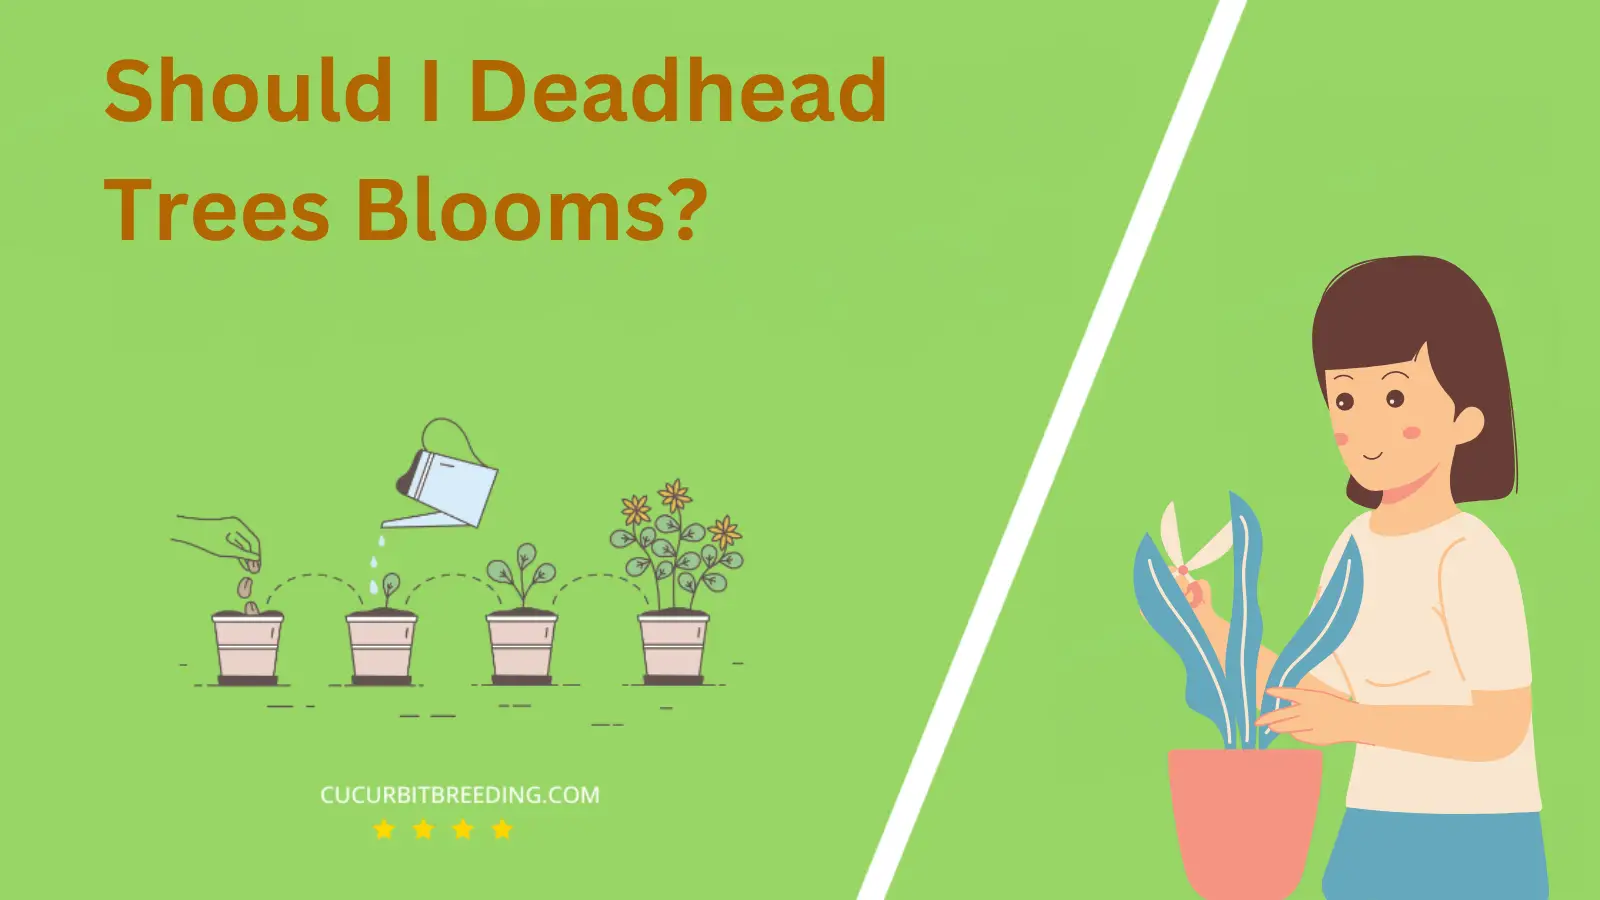 Should I Deadhead Trees Blooms?